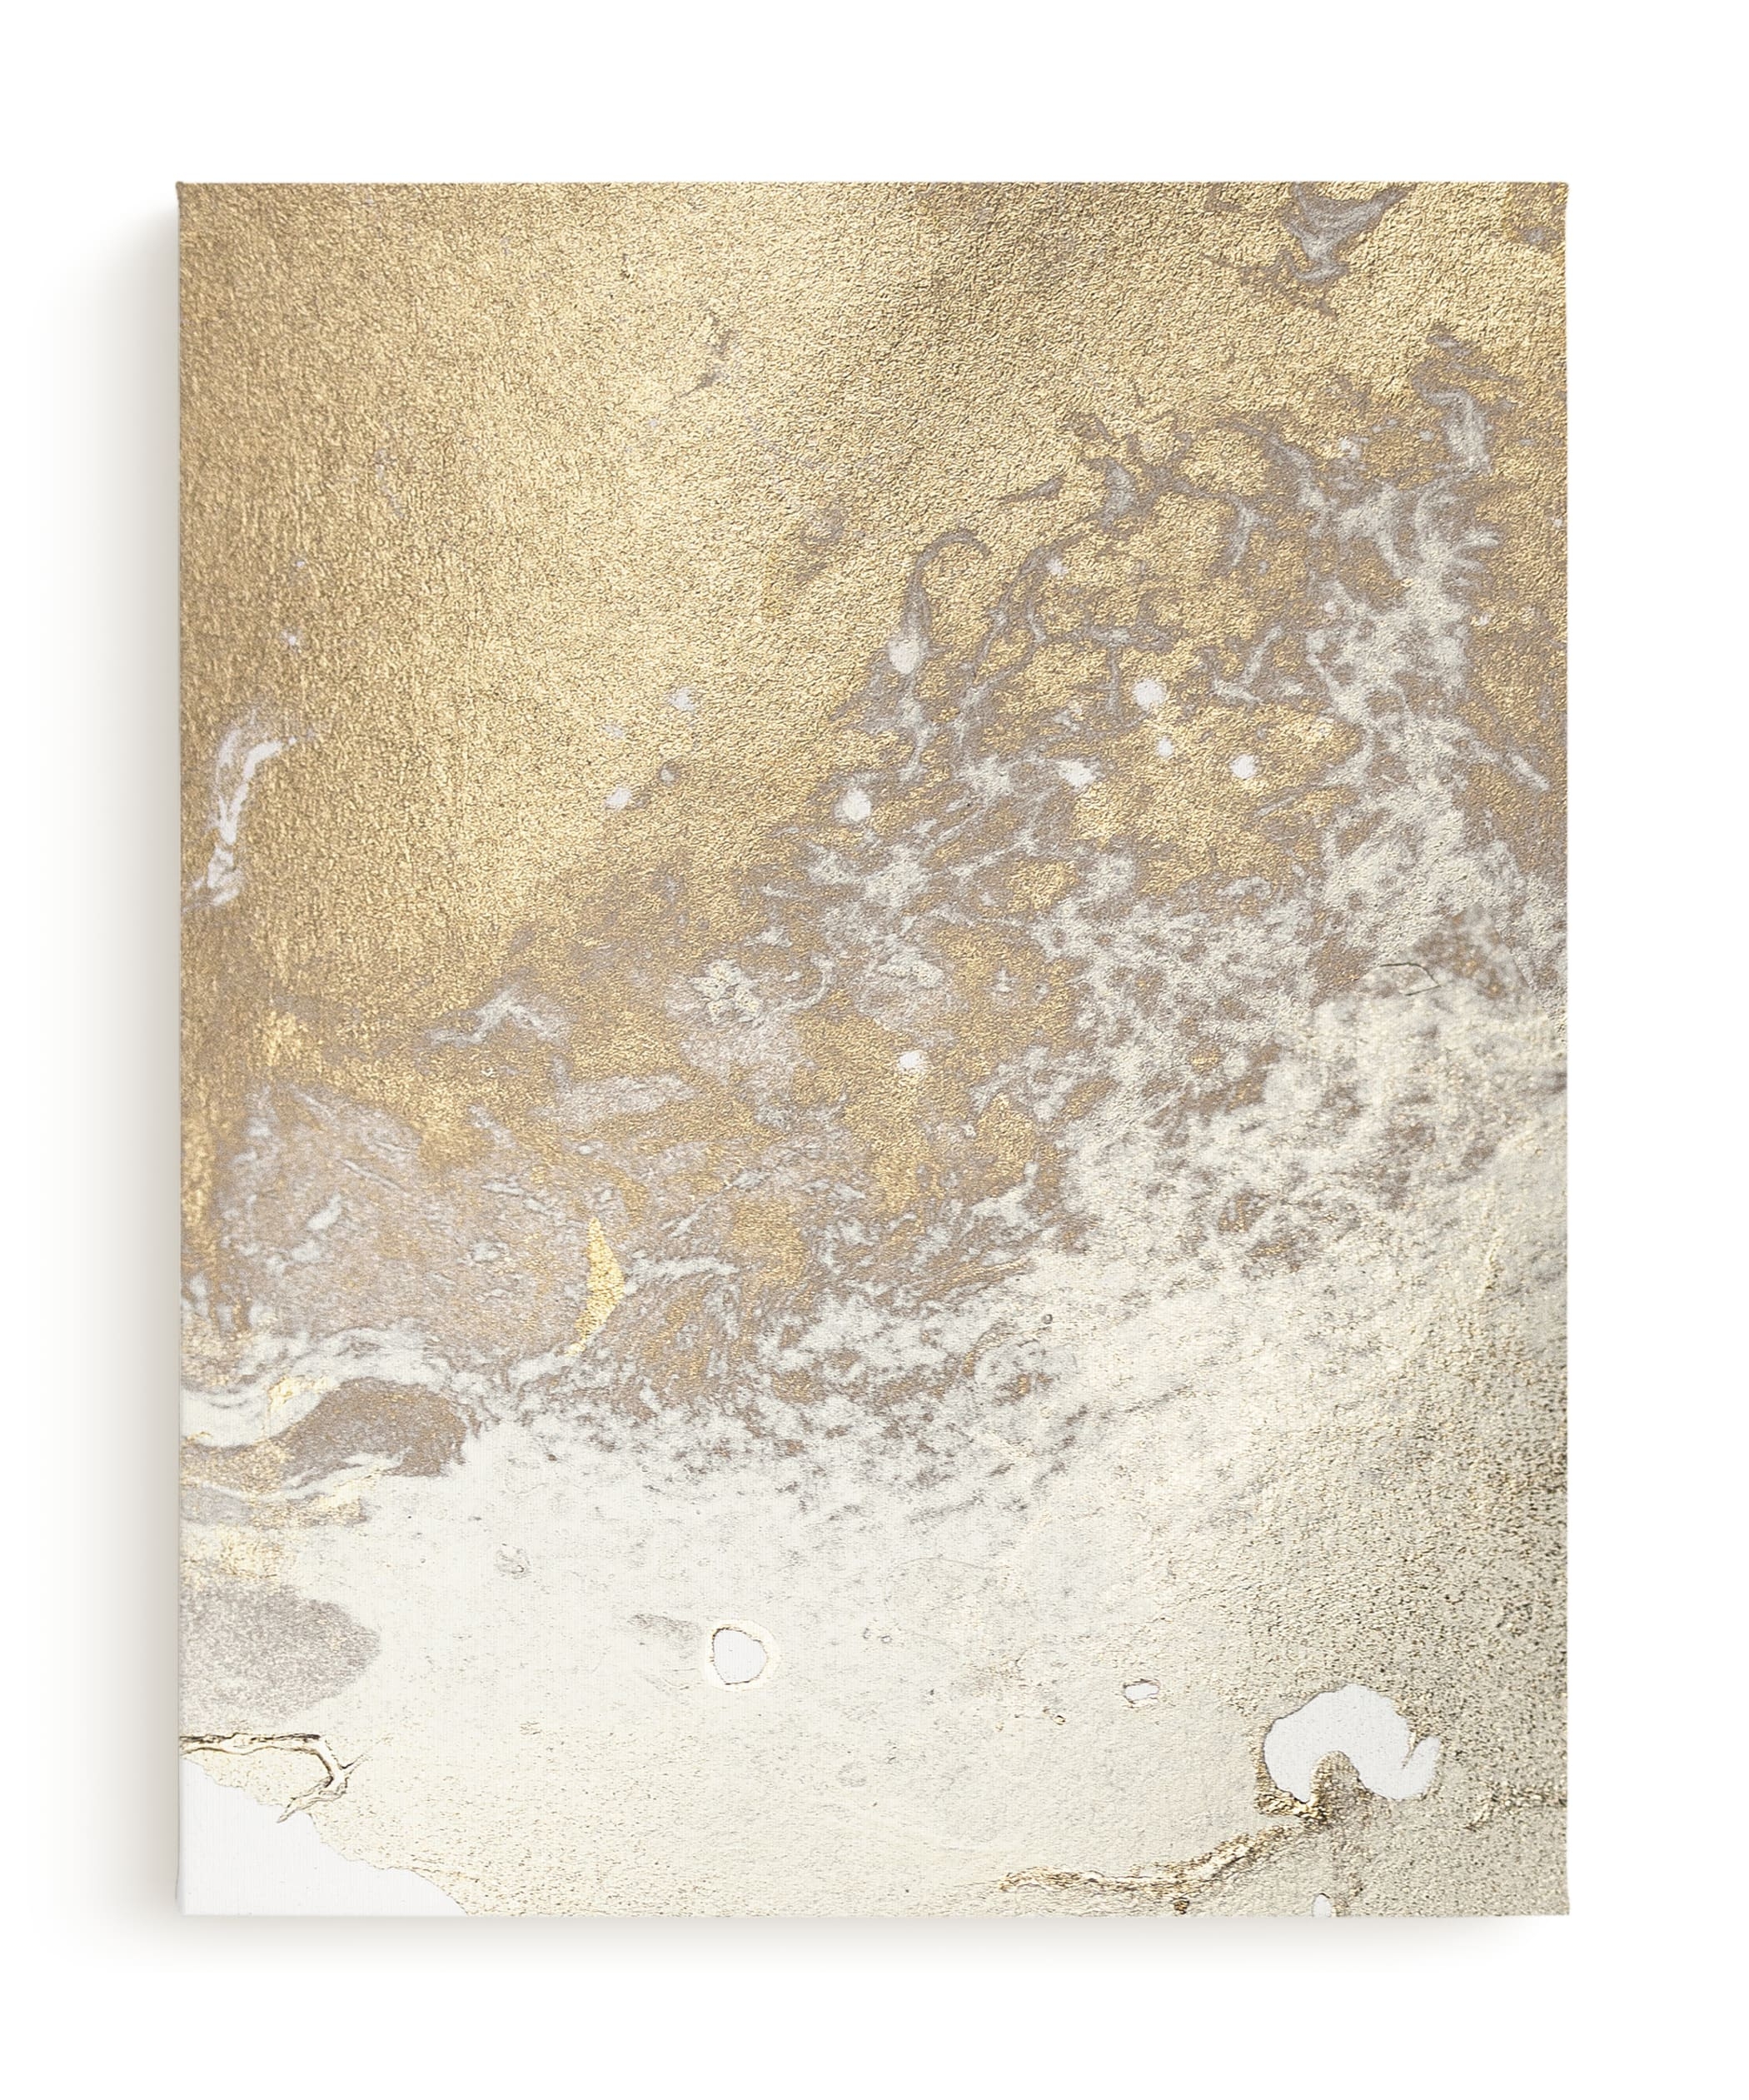 Aurum Sand No. 3 - Image 0